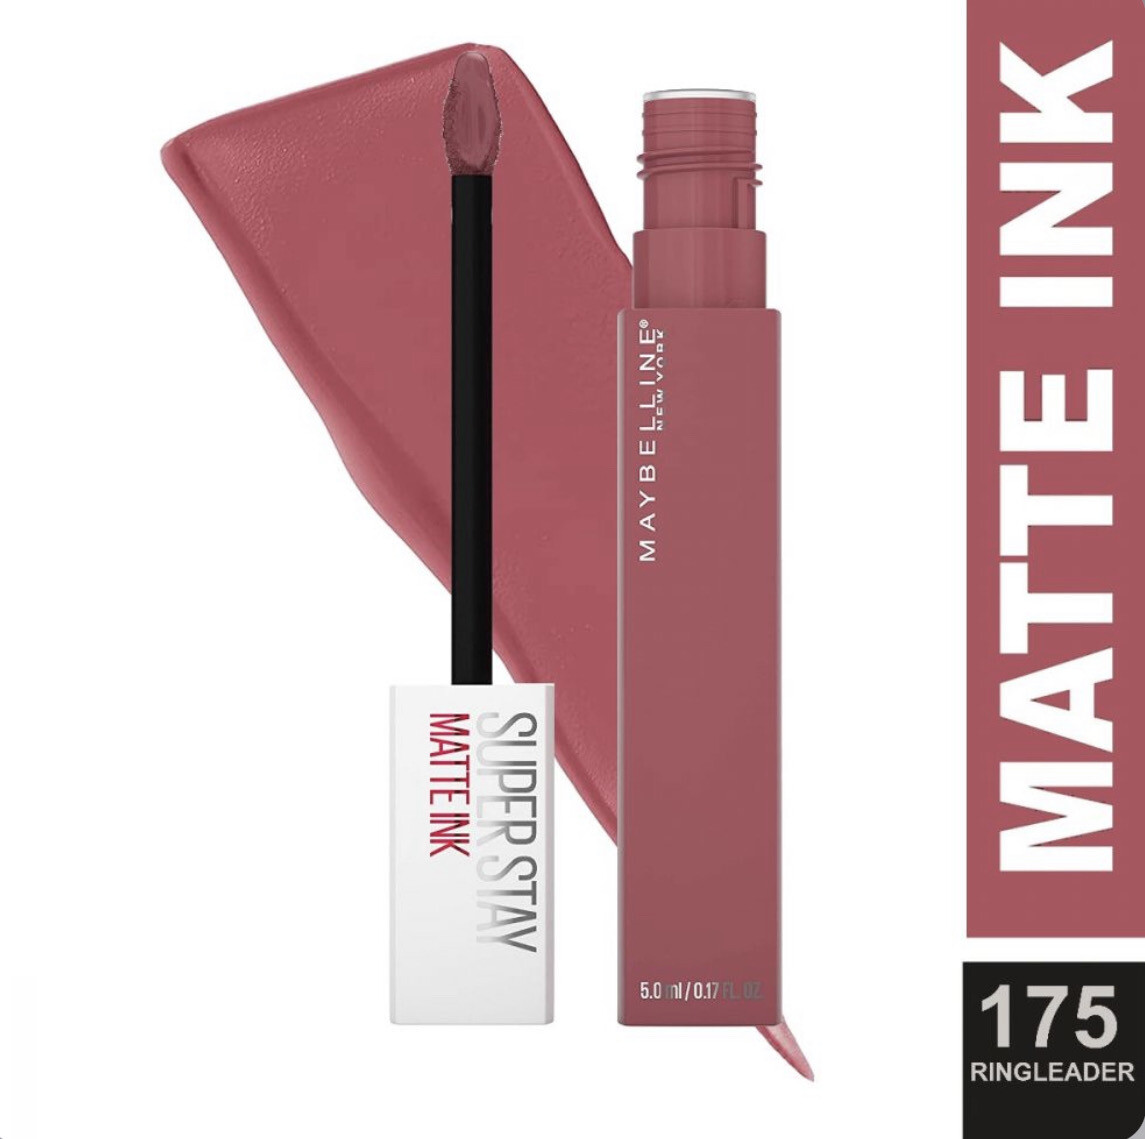 Maybelline - Superstay Matte Ink Pinks Liquid Lipstick | 175 Ringleader